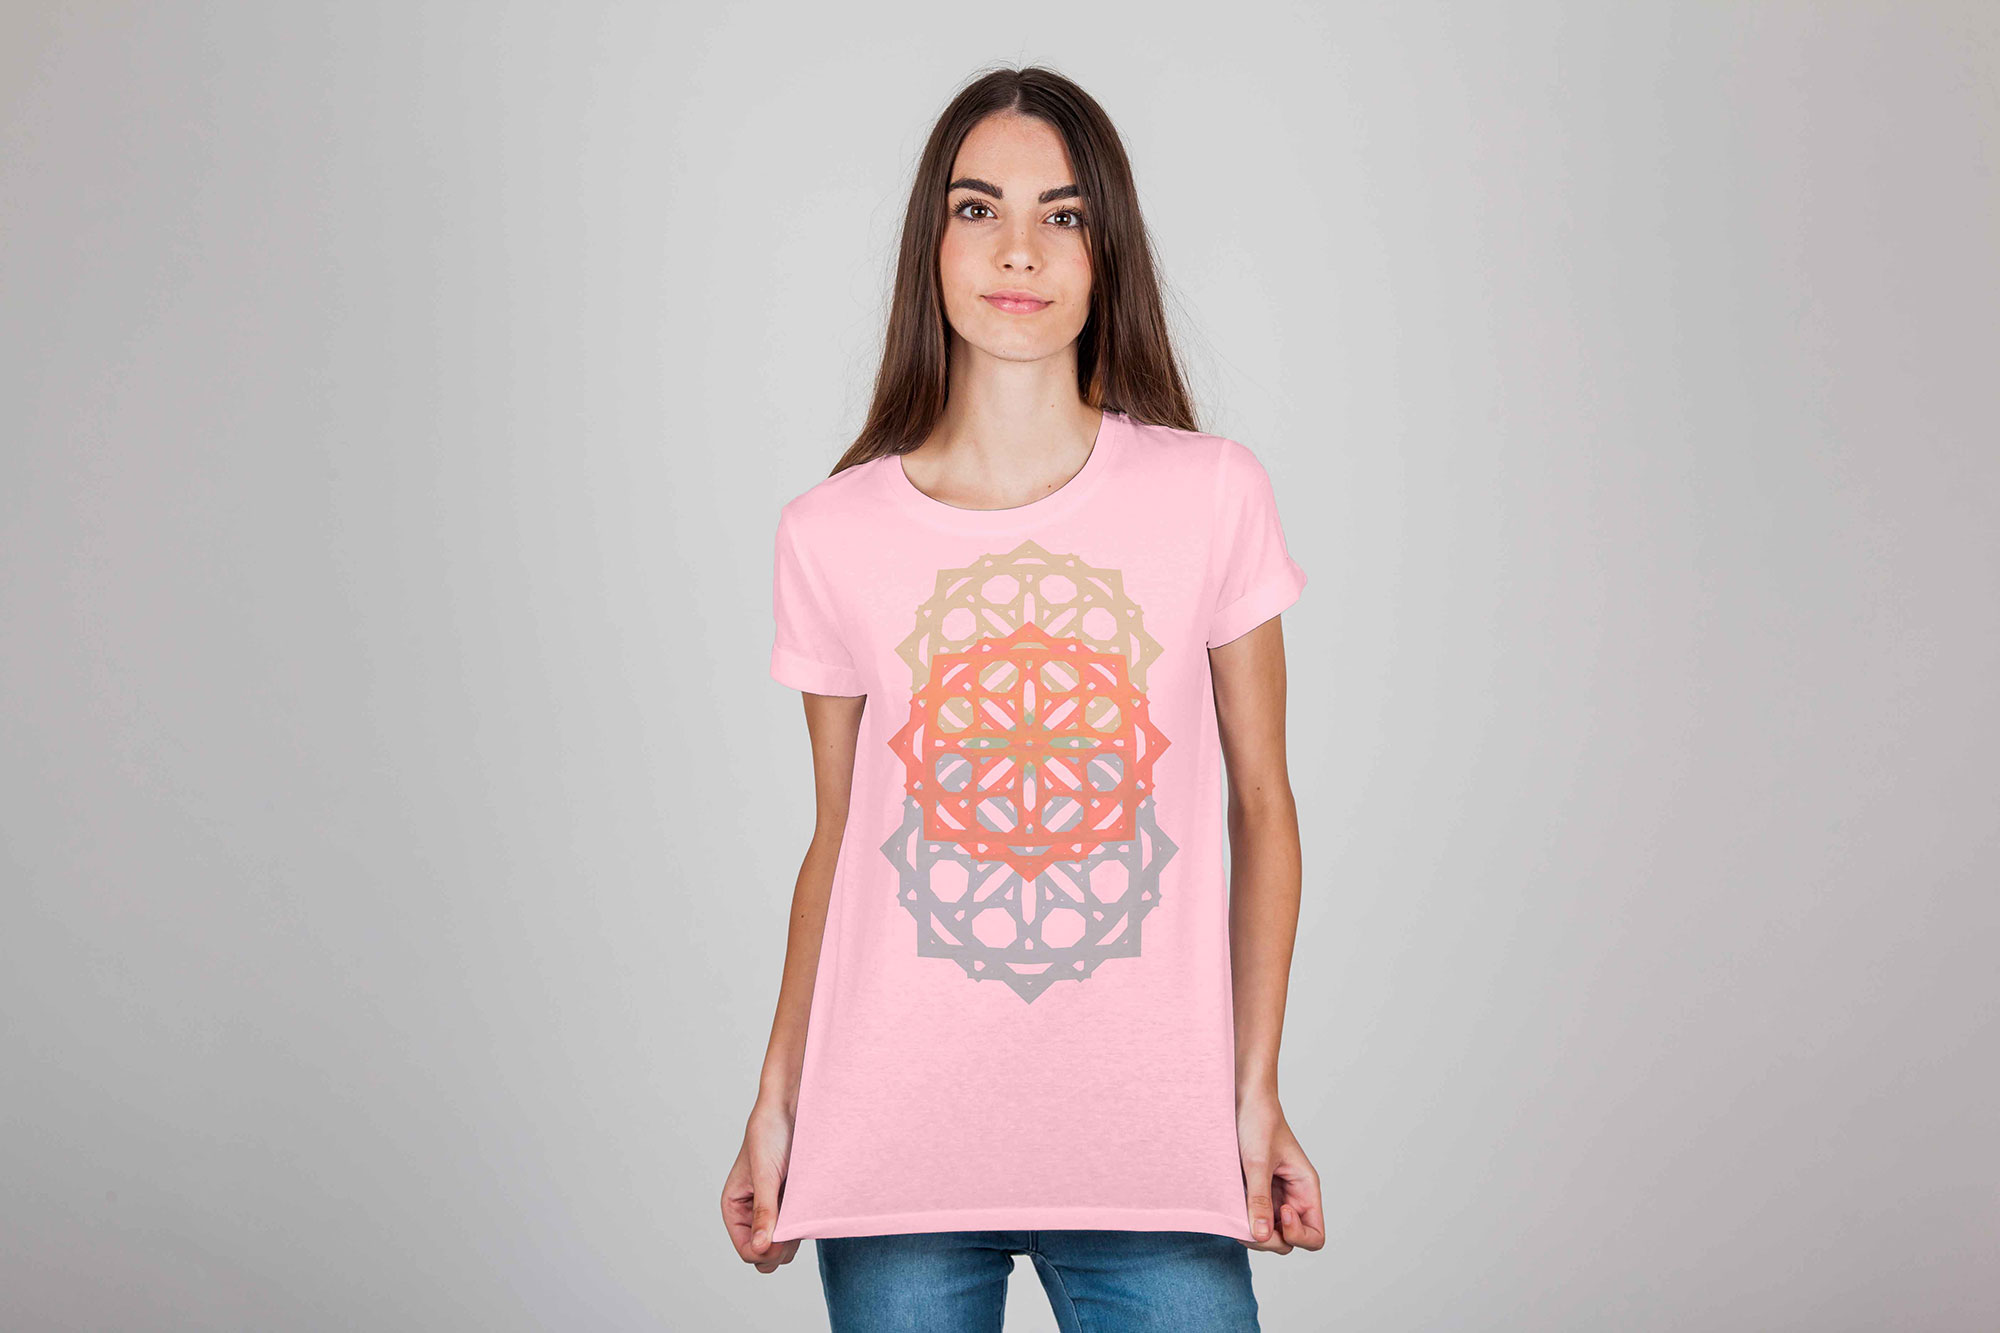 HCruet: Female Colored Art T-shirt